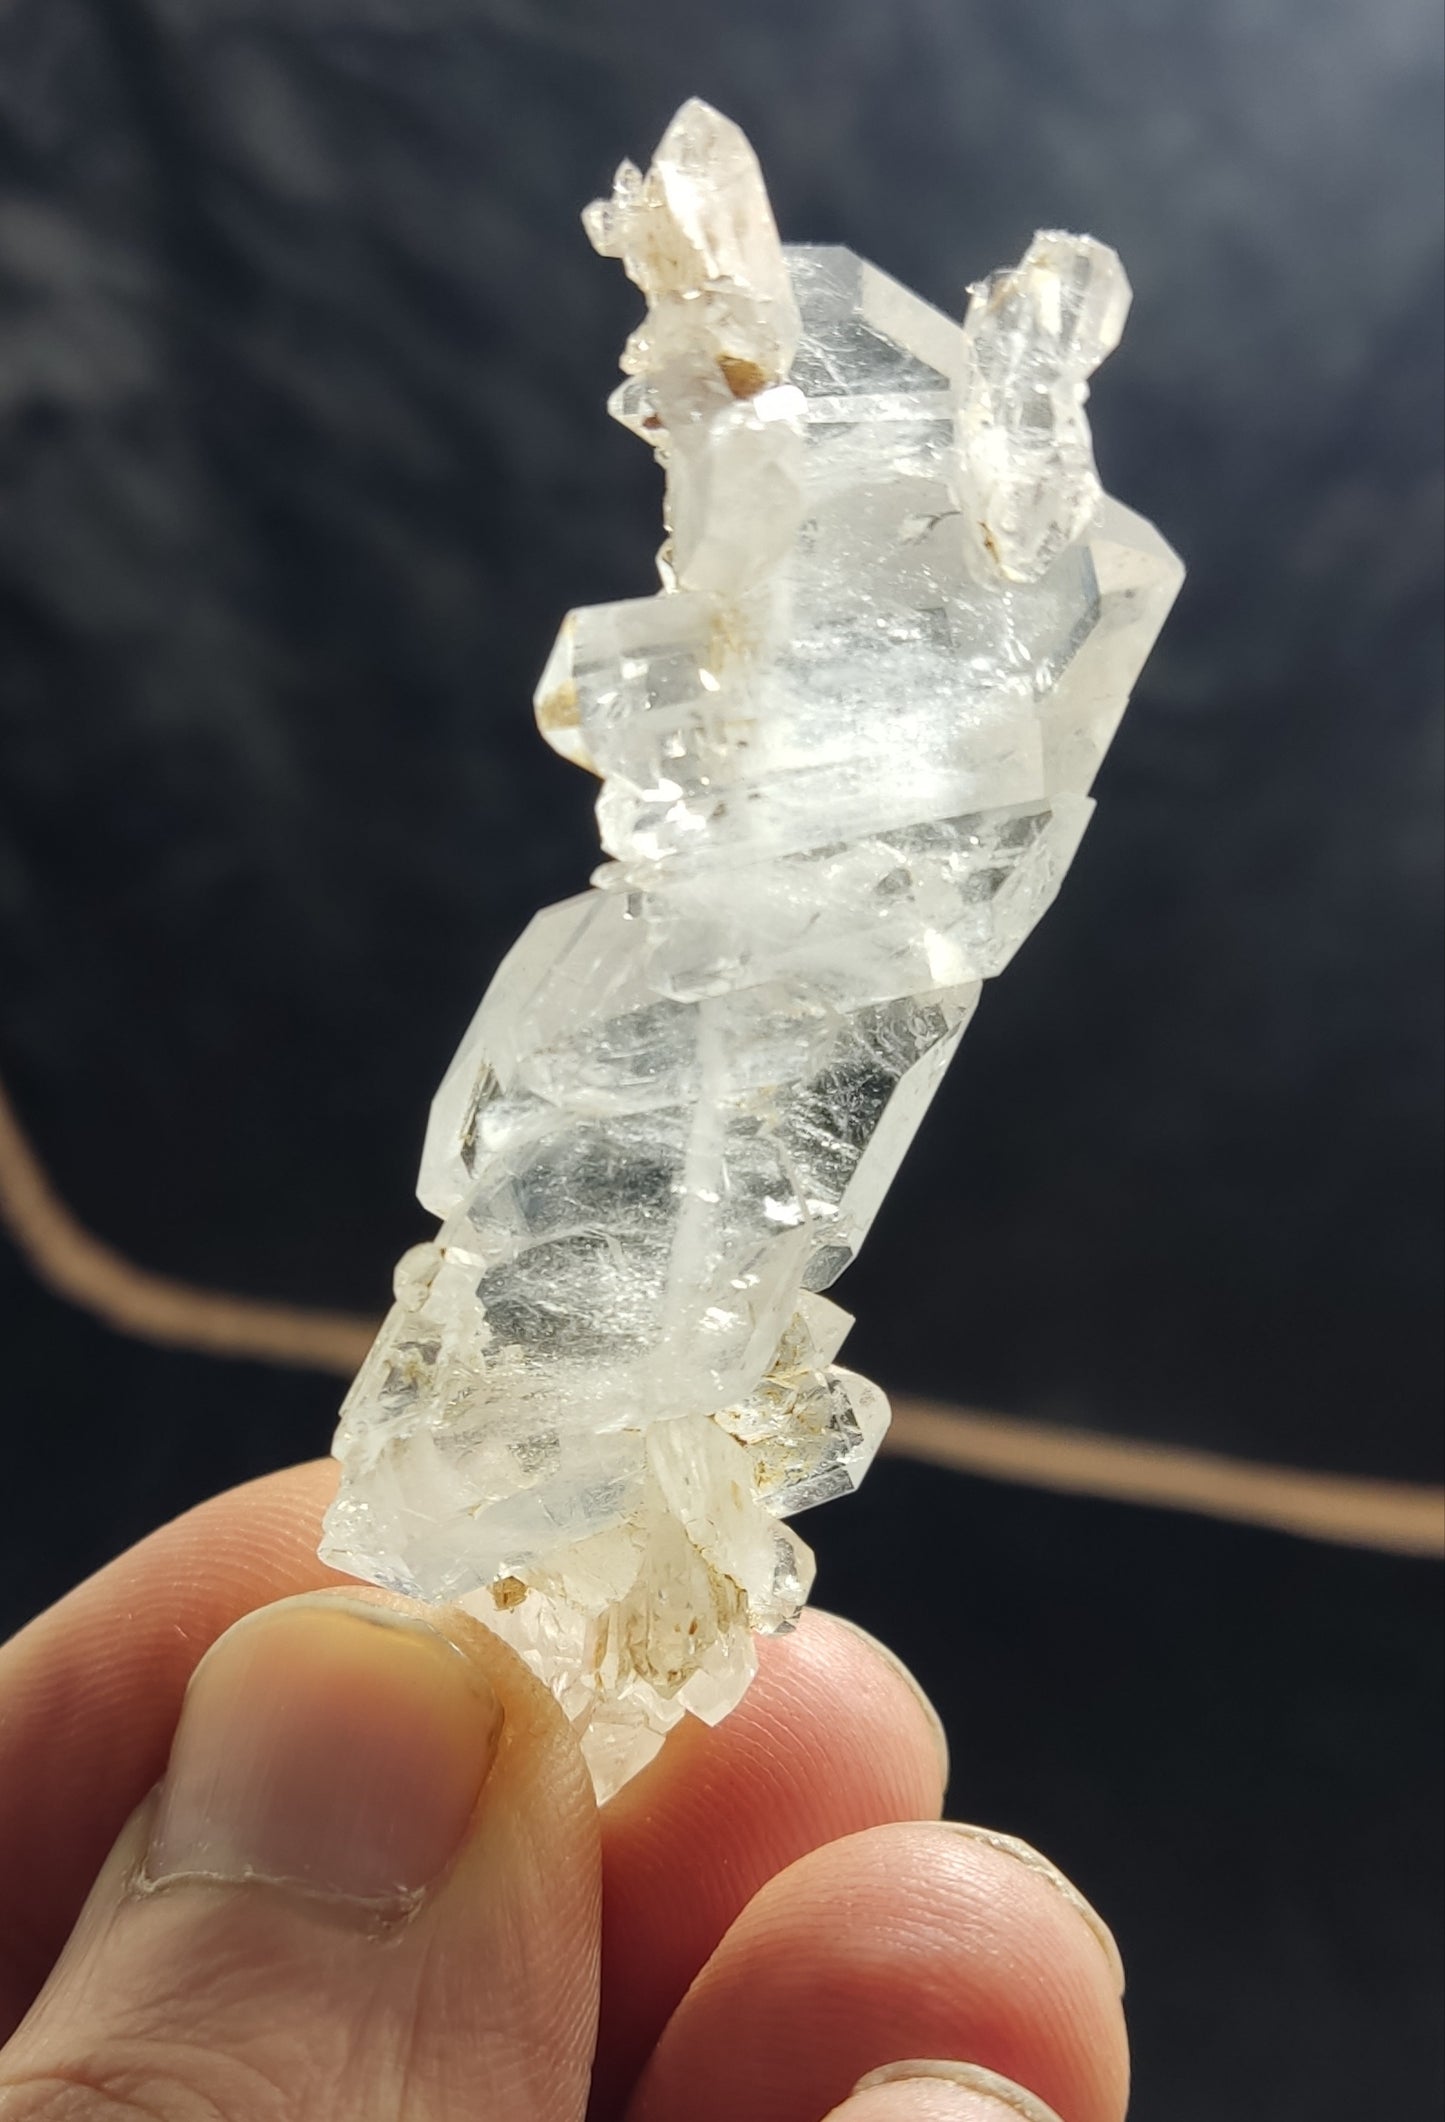 Faden quartz crystal 18 grams